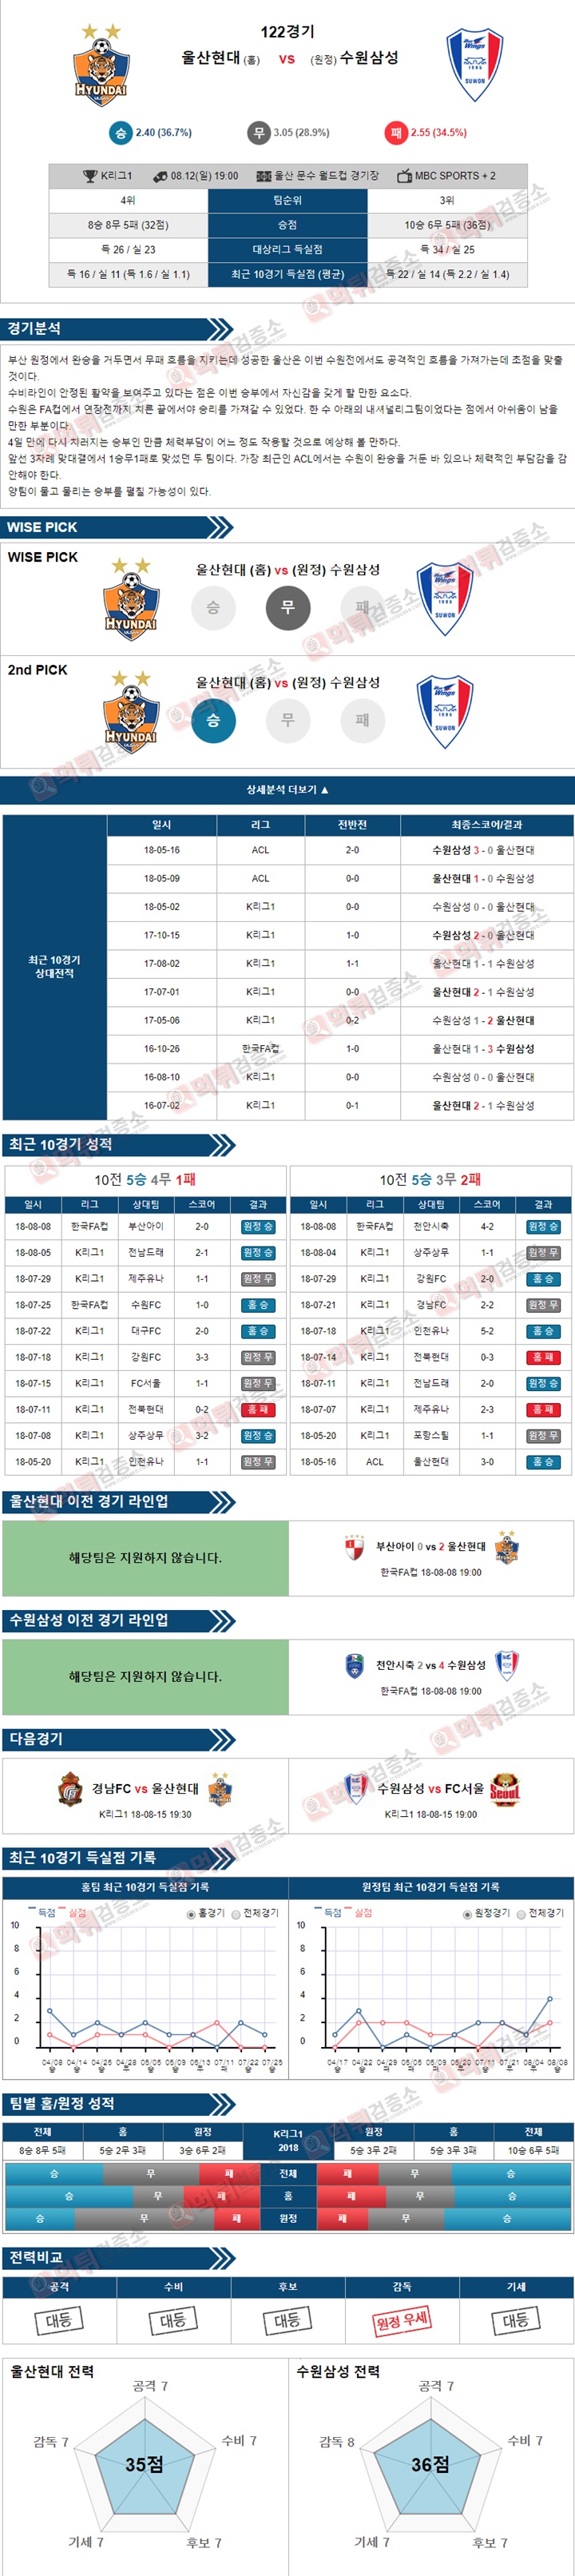 K리그1 8월12일 울산현대 vs 수원삼성 먹튀 검증소 분석픽